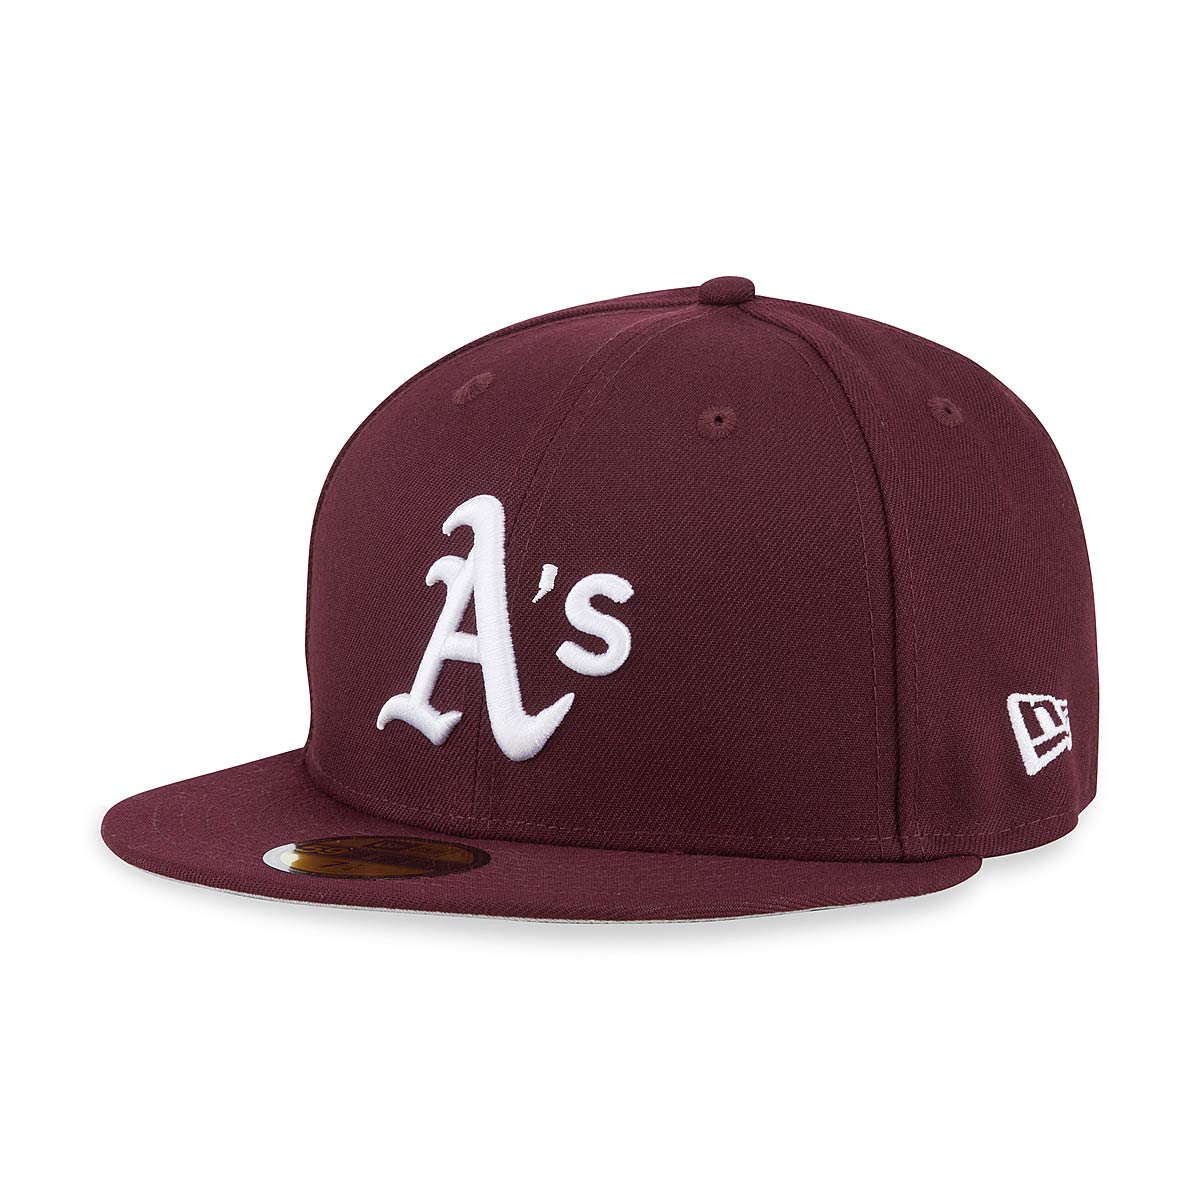 Image of New Era MLB Oakland Athletics 59fifty Cap, Dark Purple